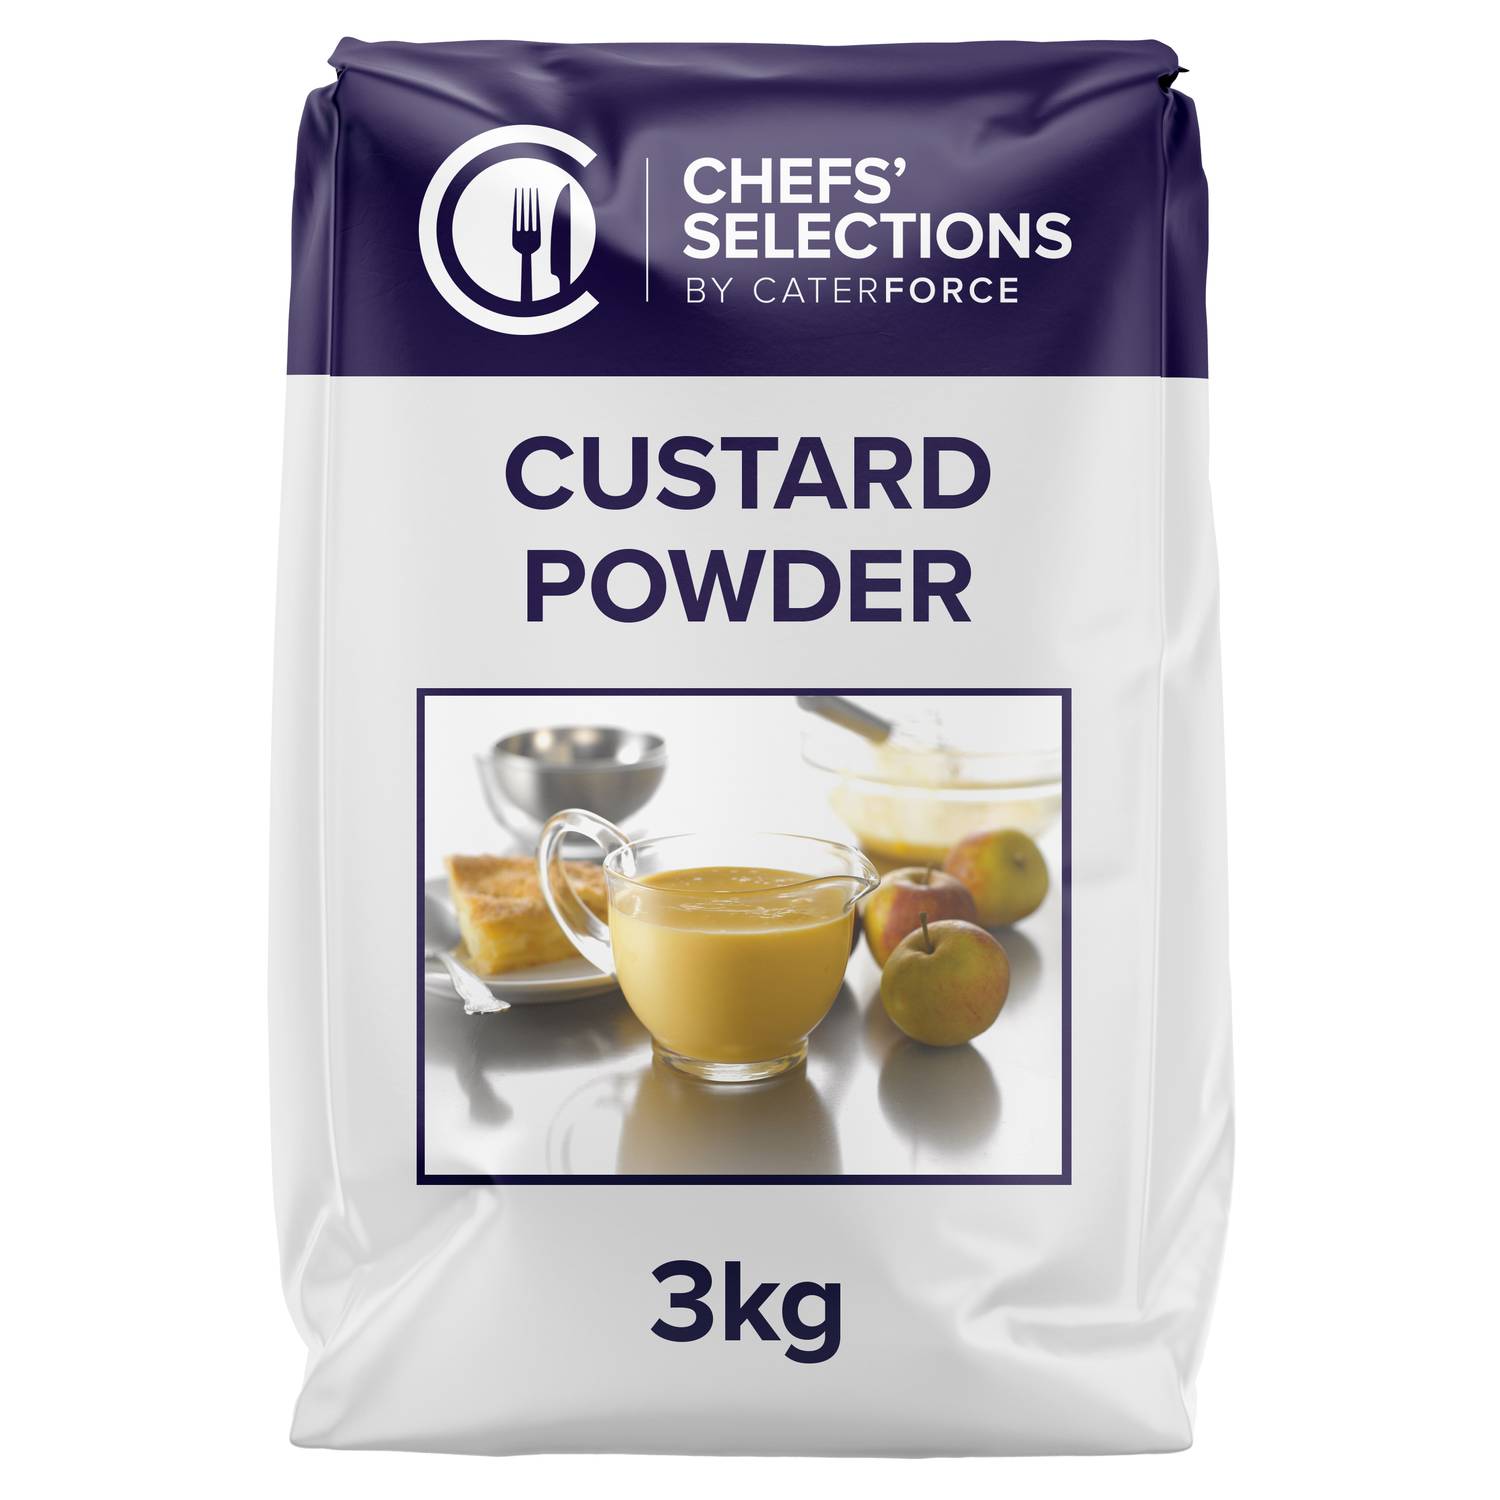 Chefs’ Selections Custard Powder Mix (4 x 3kg)